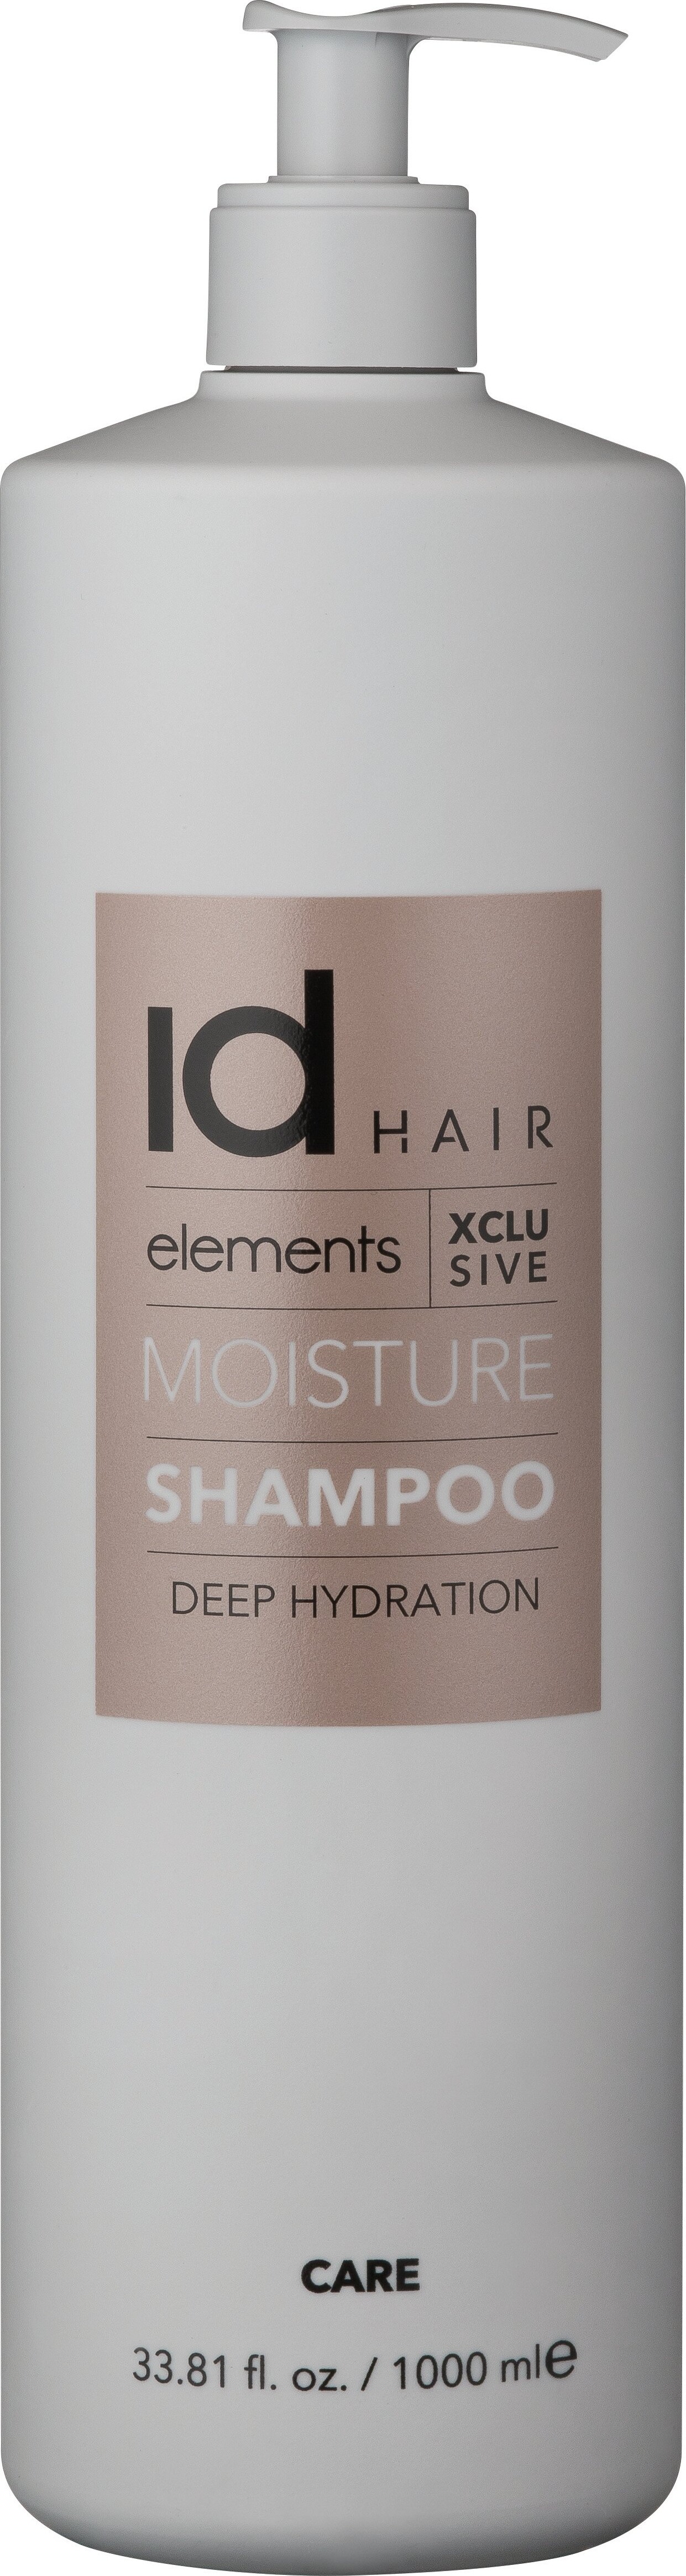 Billede af Id Hair - Elements Xclusive Moisture Shampoo 1000 Ml hos Gucca.dk